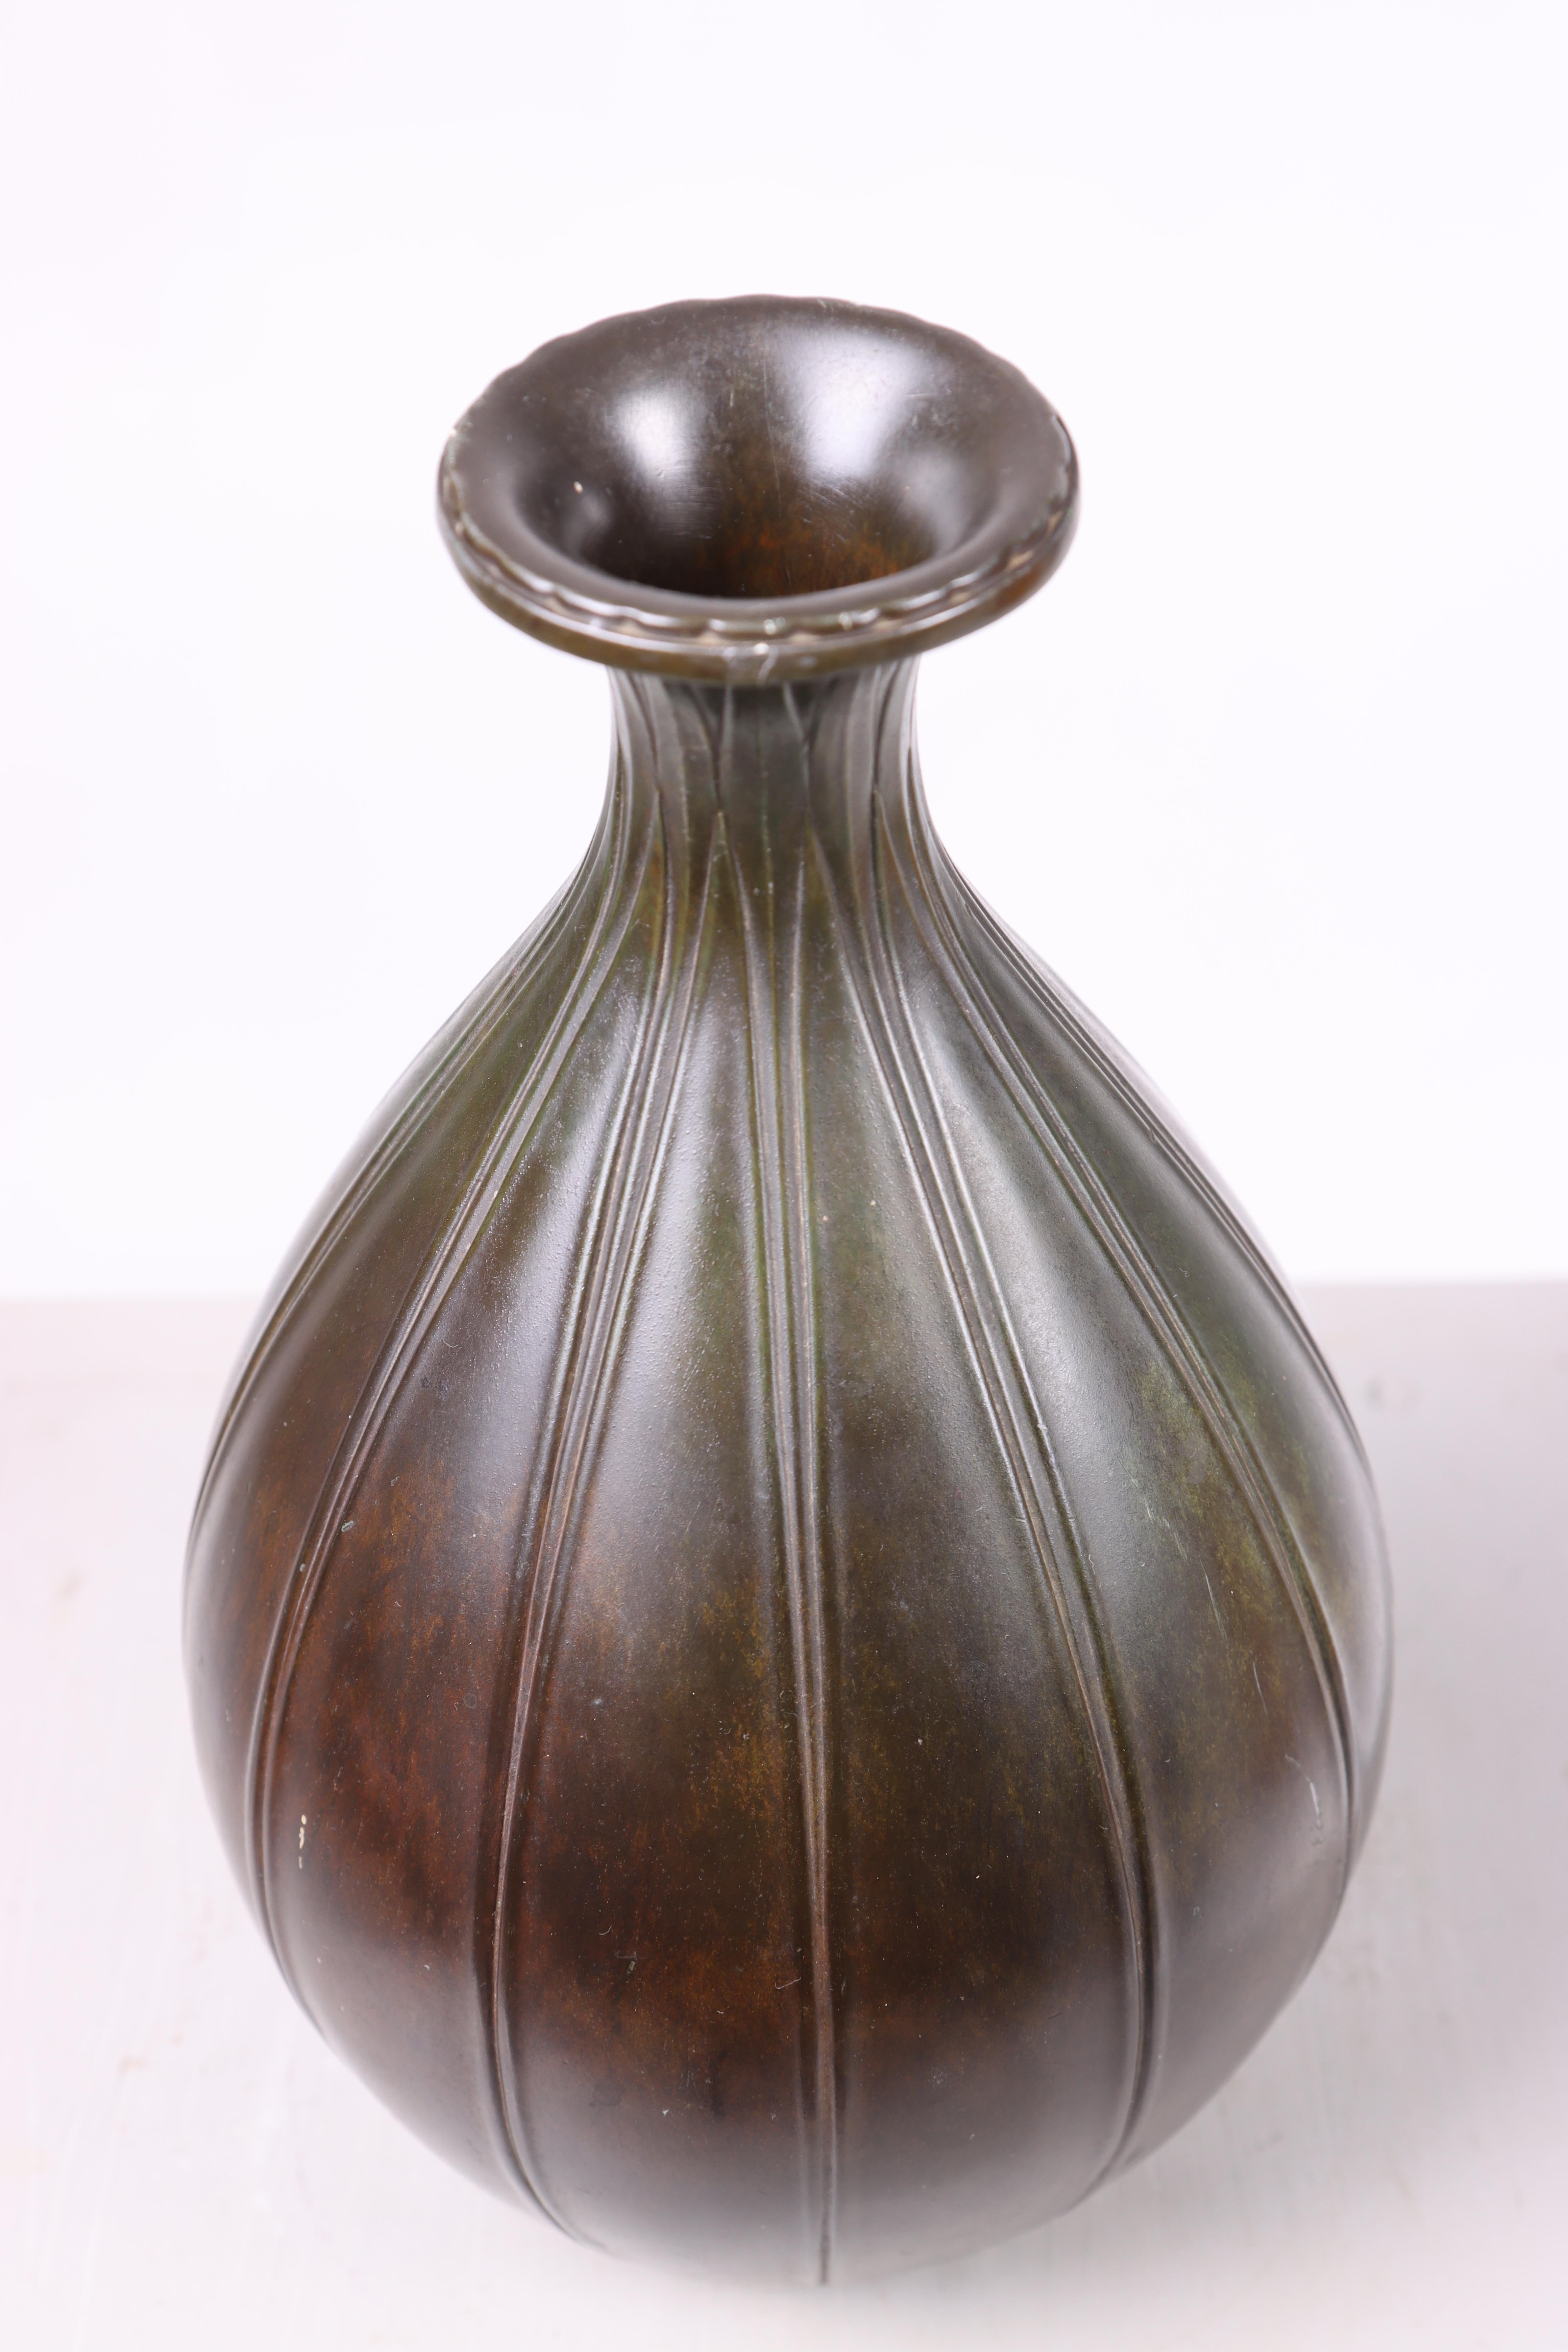 Scandinavian Modern Large Vase in 'Disko' Metal by Just Andersen, Made in Denmark, 1940s For Sale